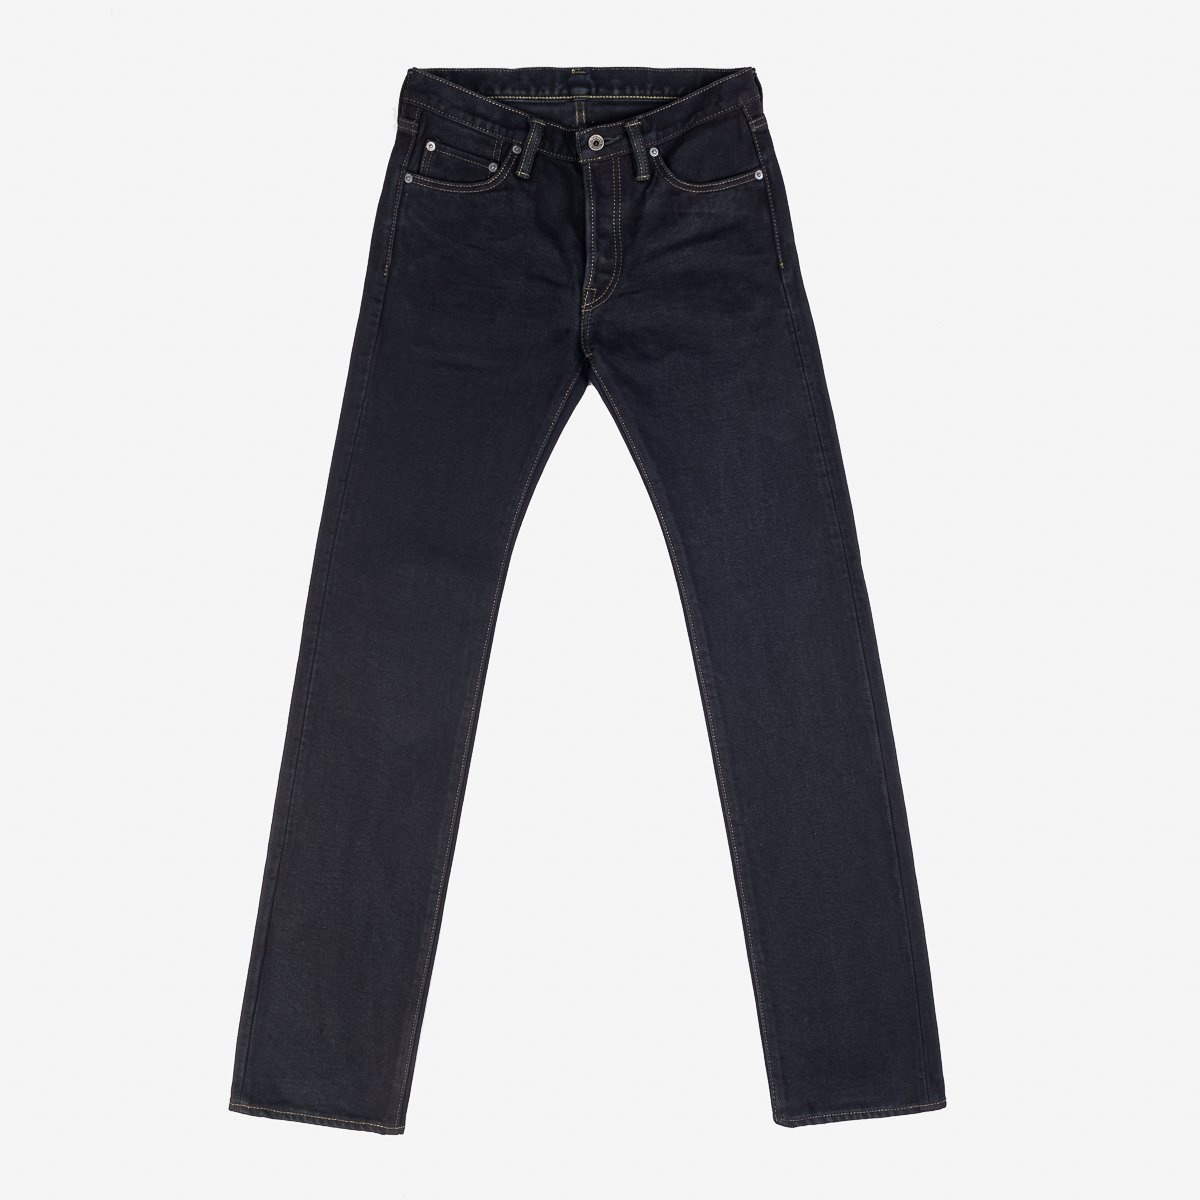 IH-666S-21od 21oz Selvedge Denim Slim Straight Cut Jeans - Indigo Overdyed Black - 1